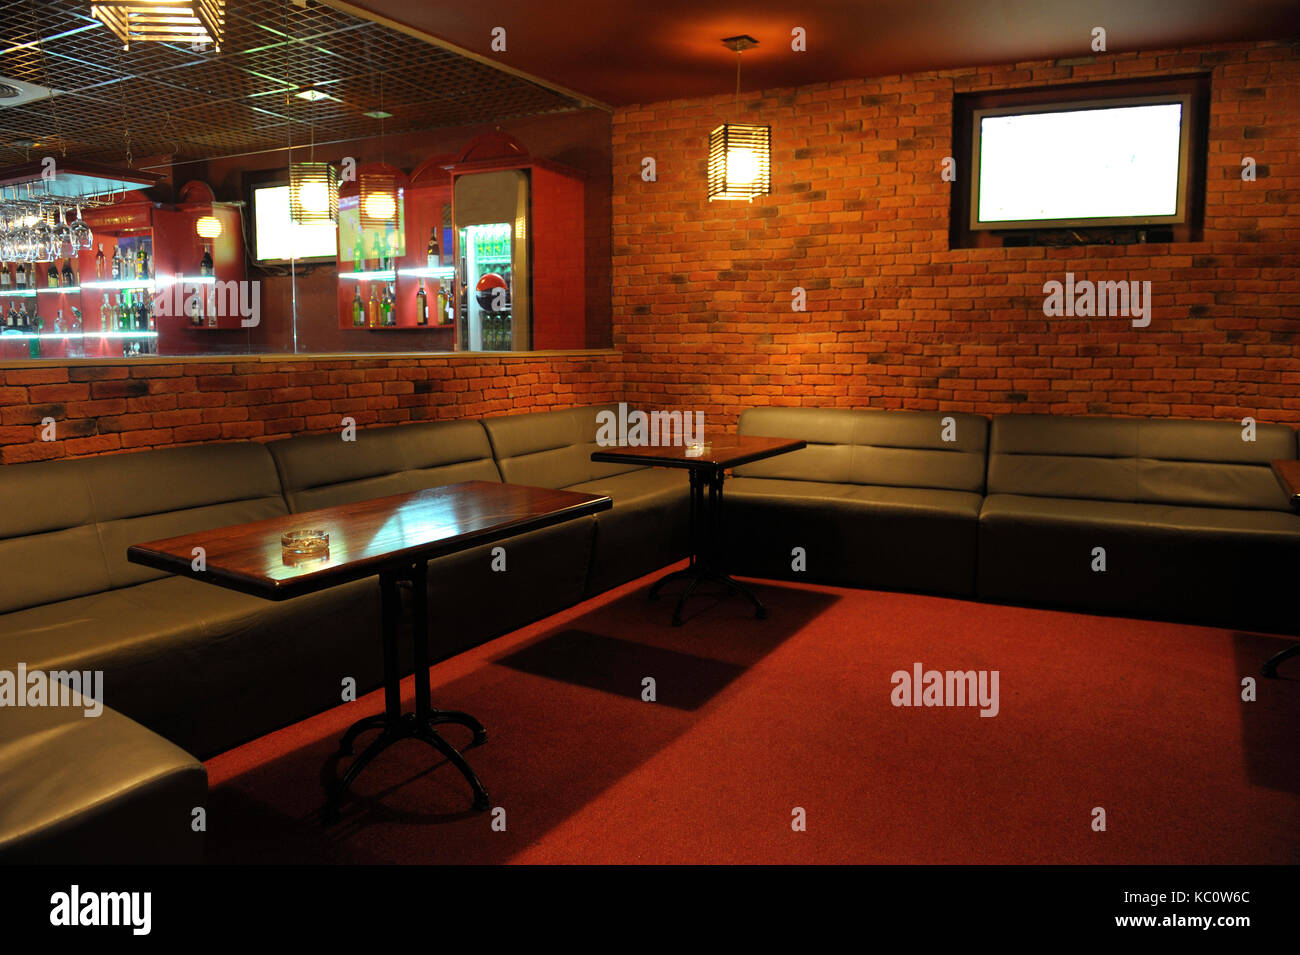 Restaurant interior: smoking area Stock Photo